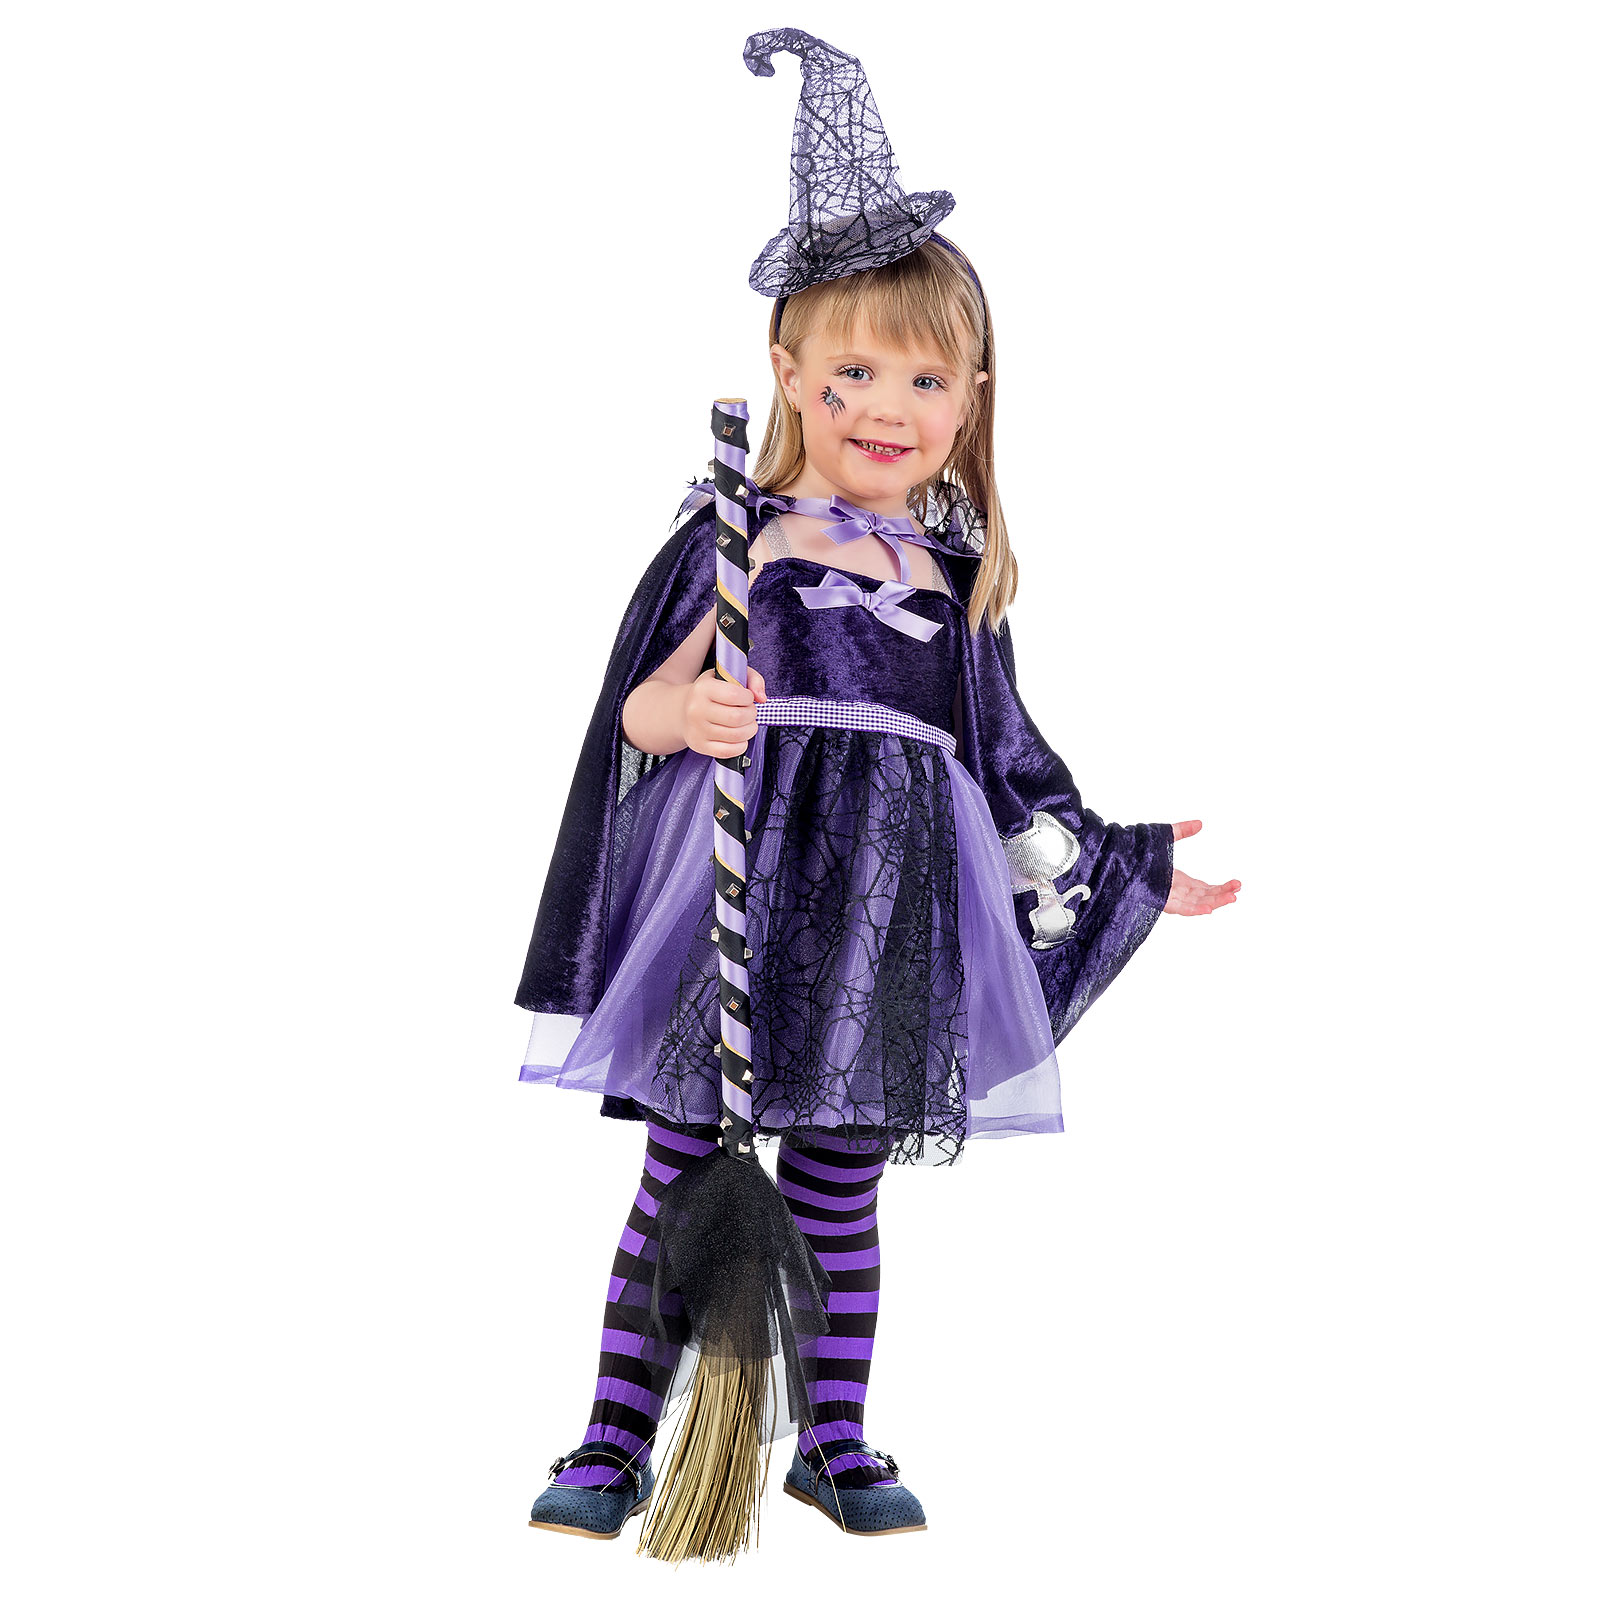 Zauberhexe - Kostüm Kinder lila